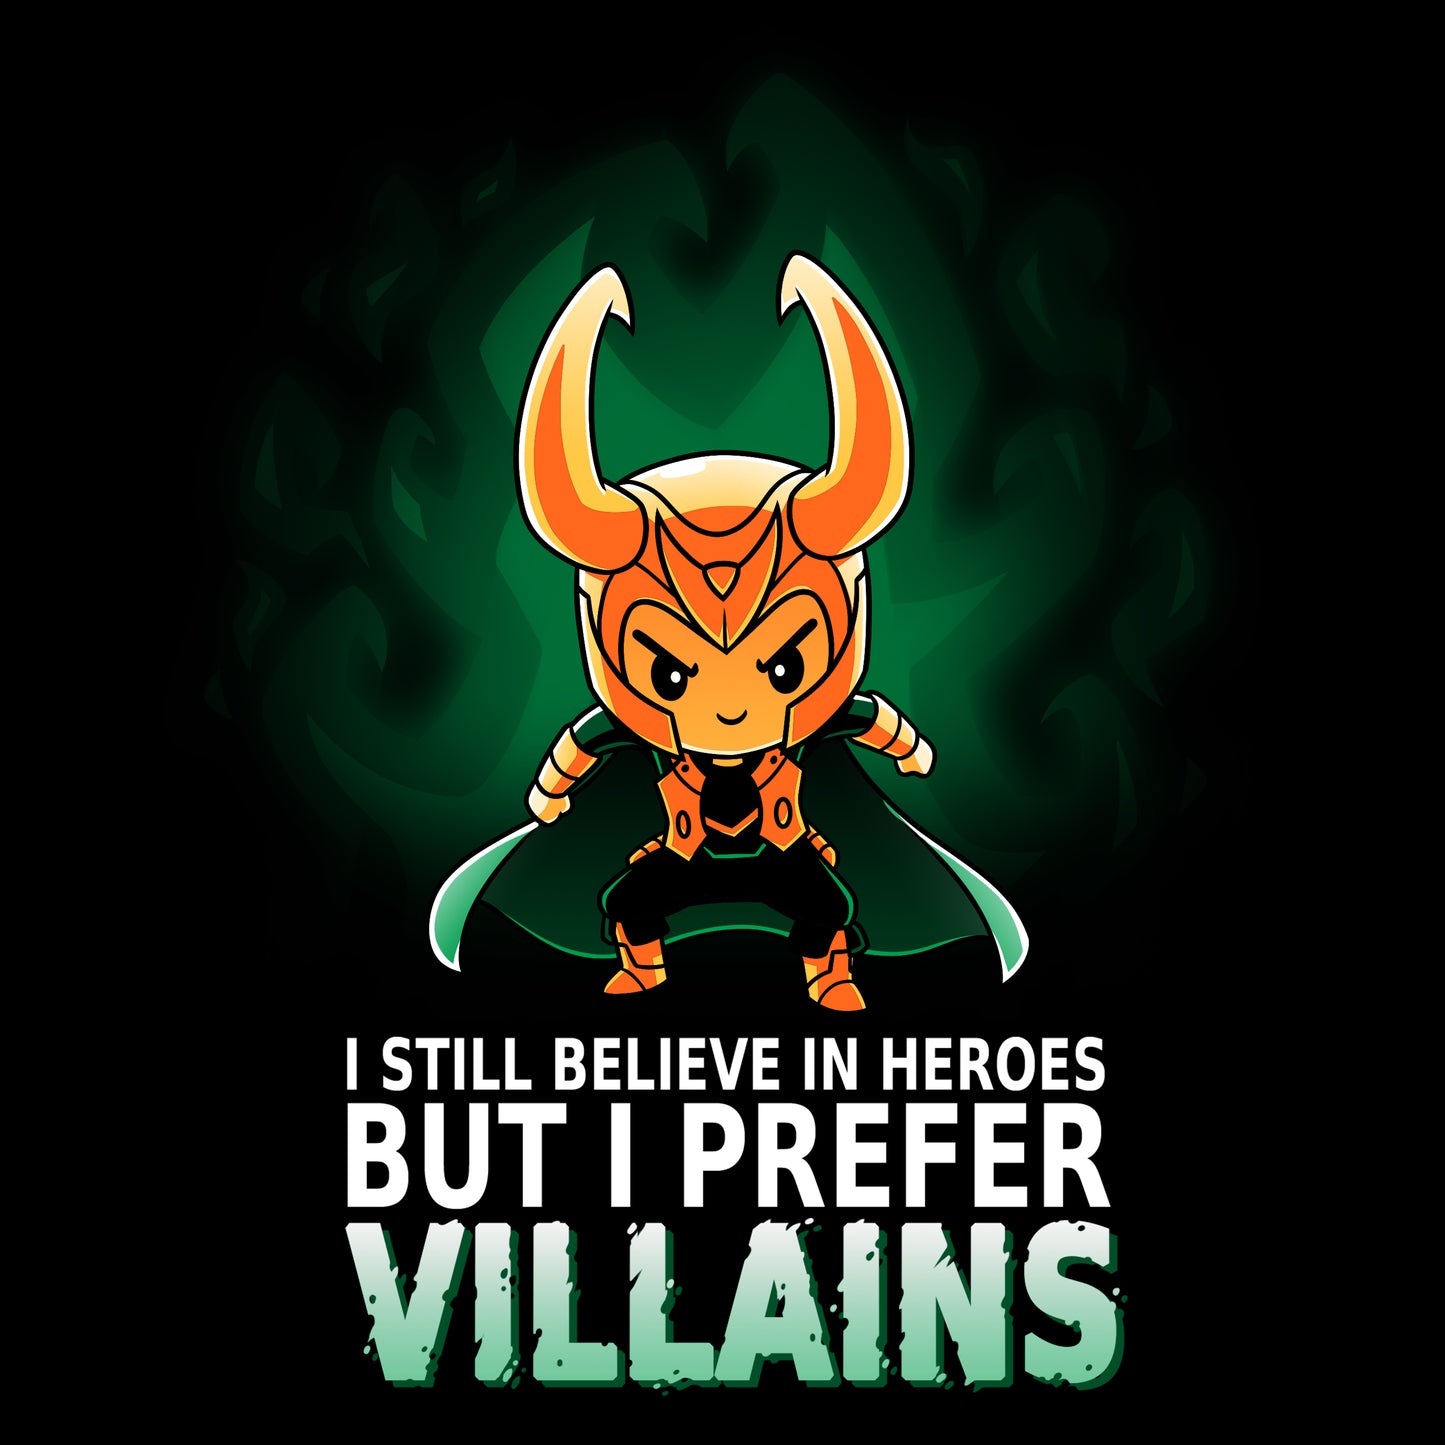 Marvel, "I Still Believe in Heroes but I Prefer Villains" T-shirt.